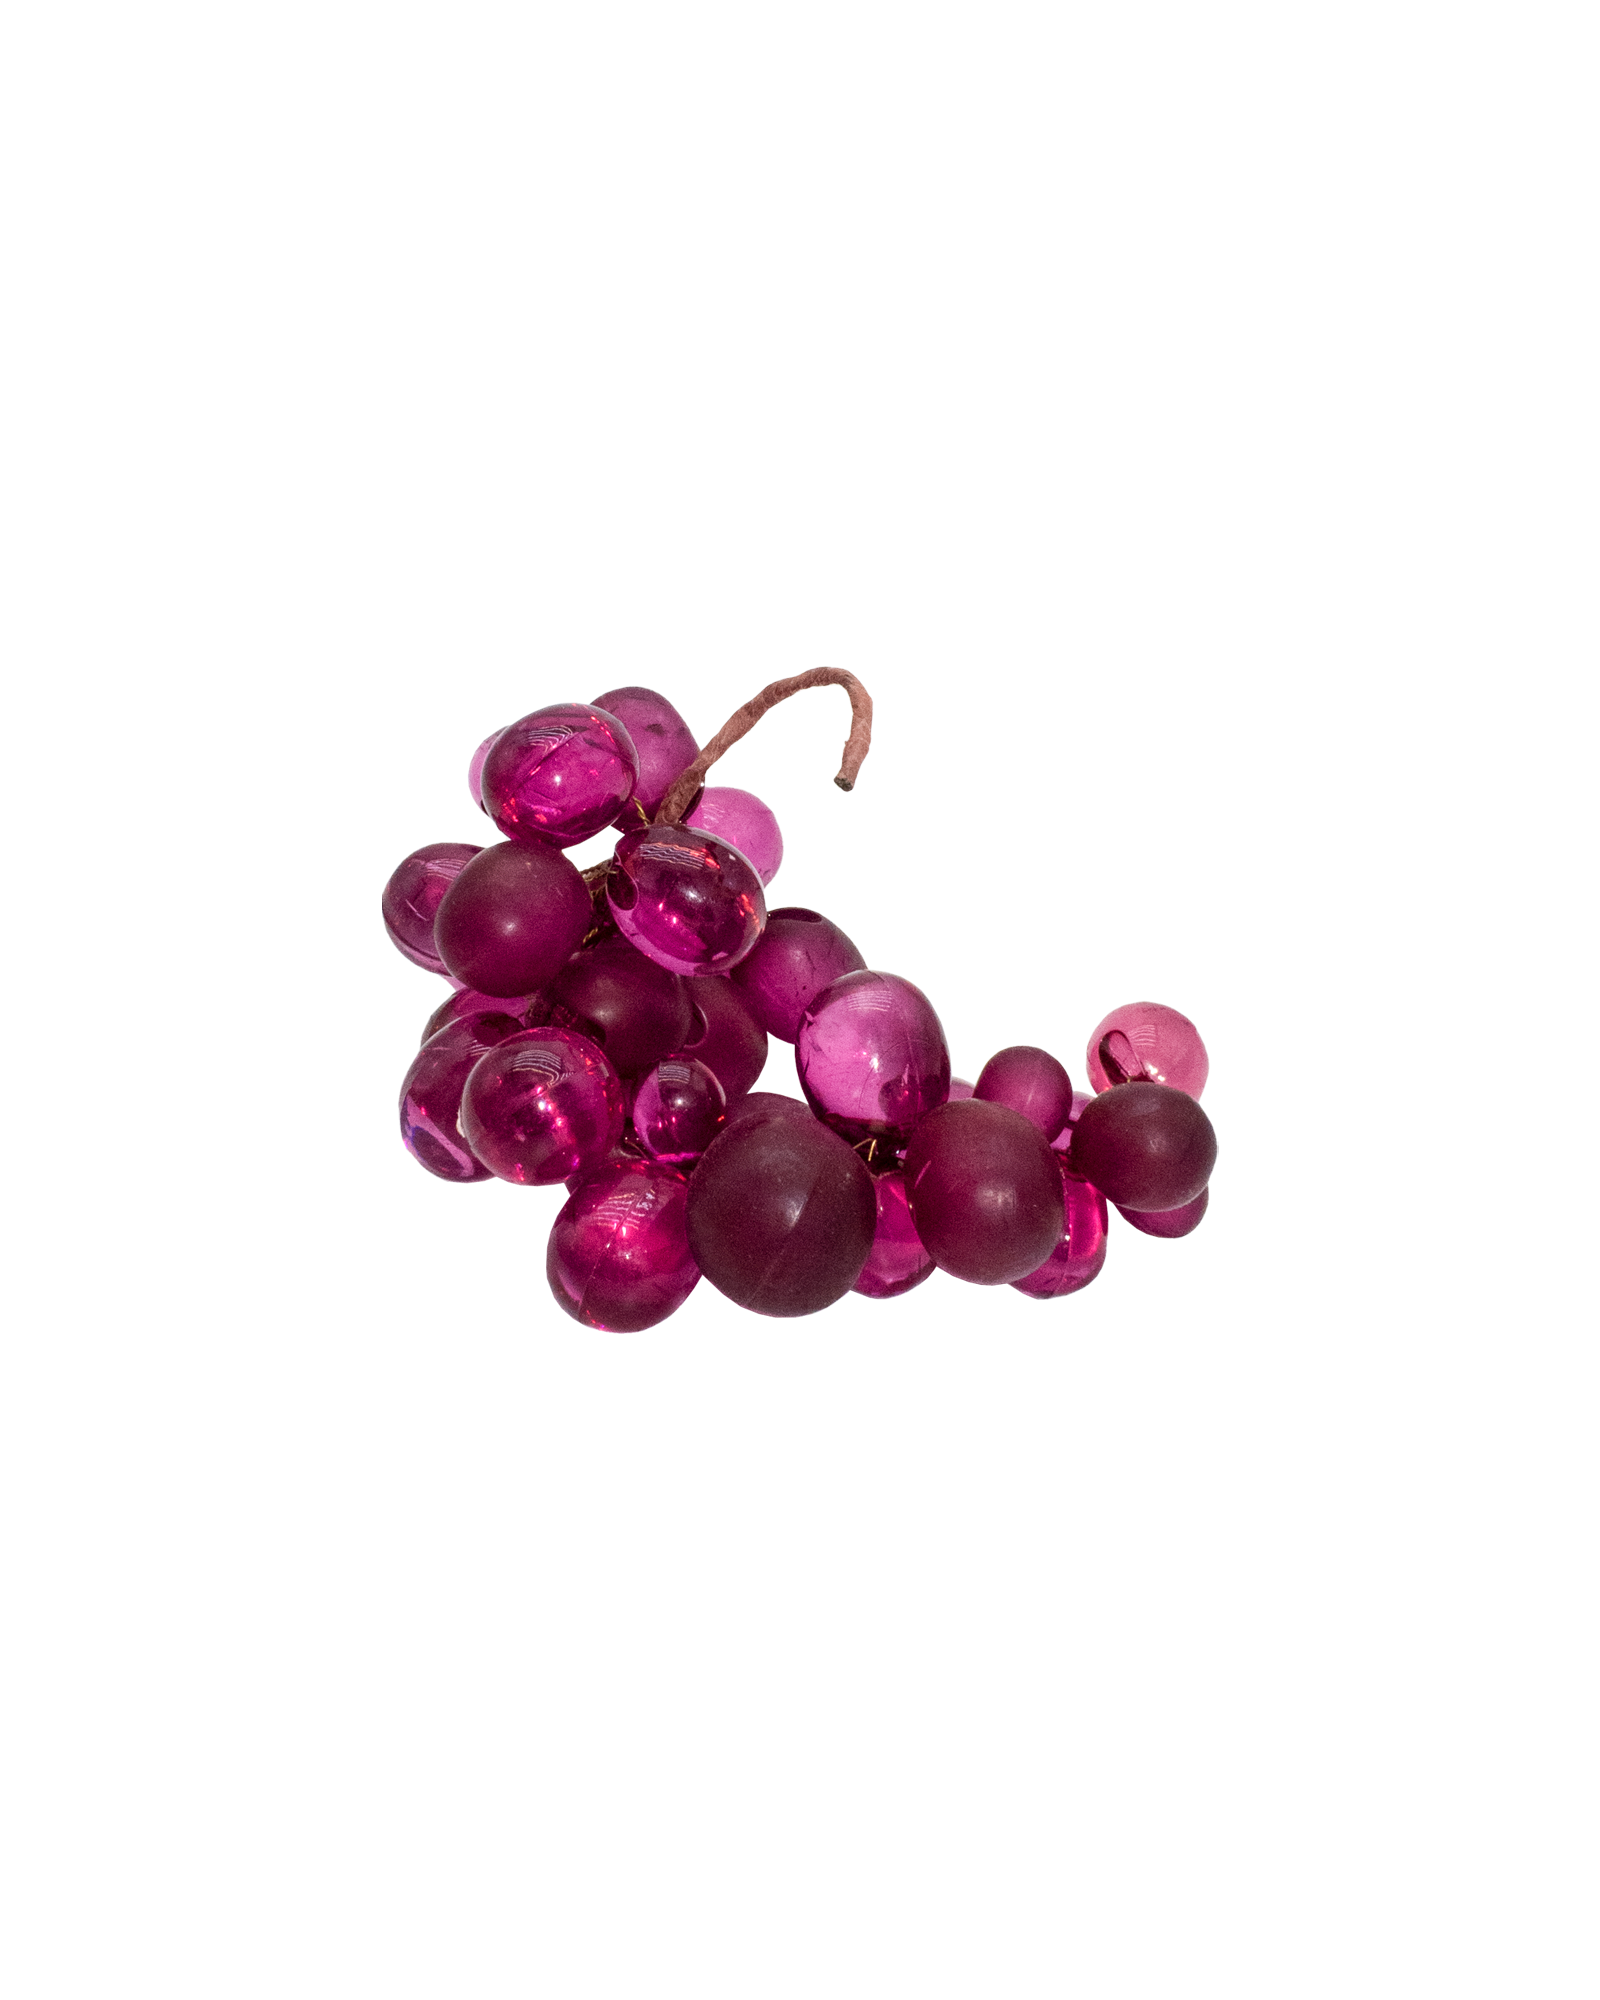 [RENTAL] Burgundy Acrylic Grapes